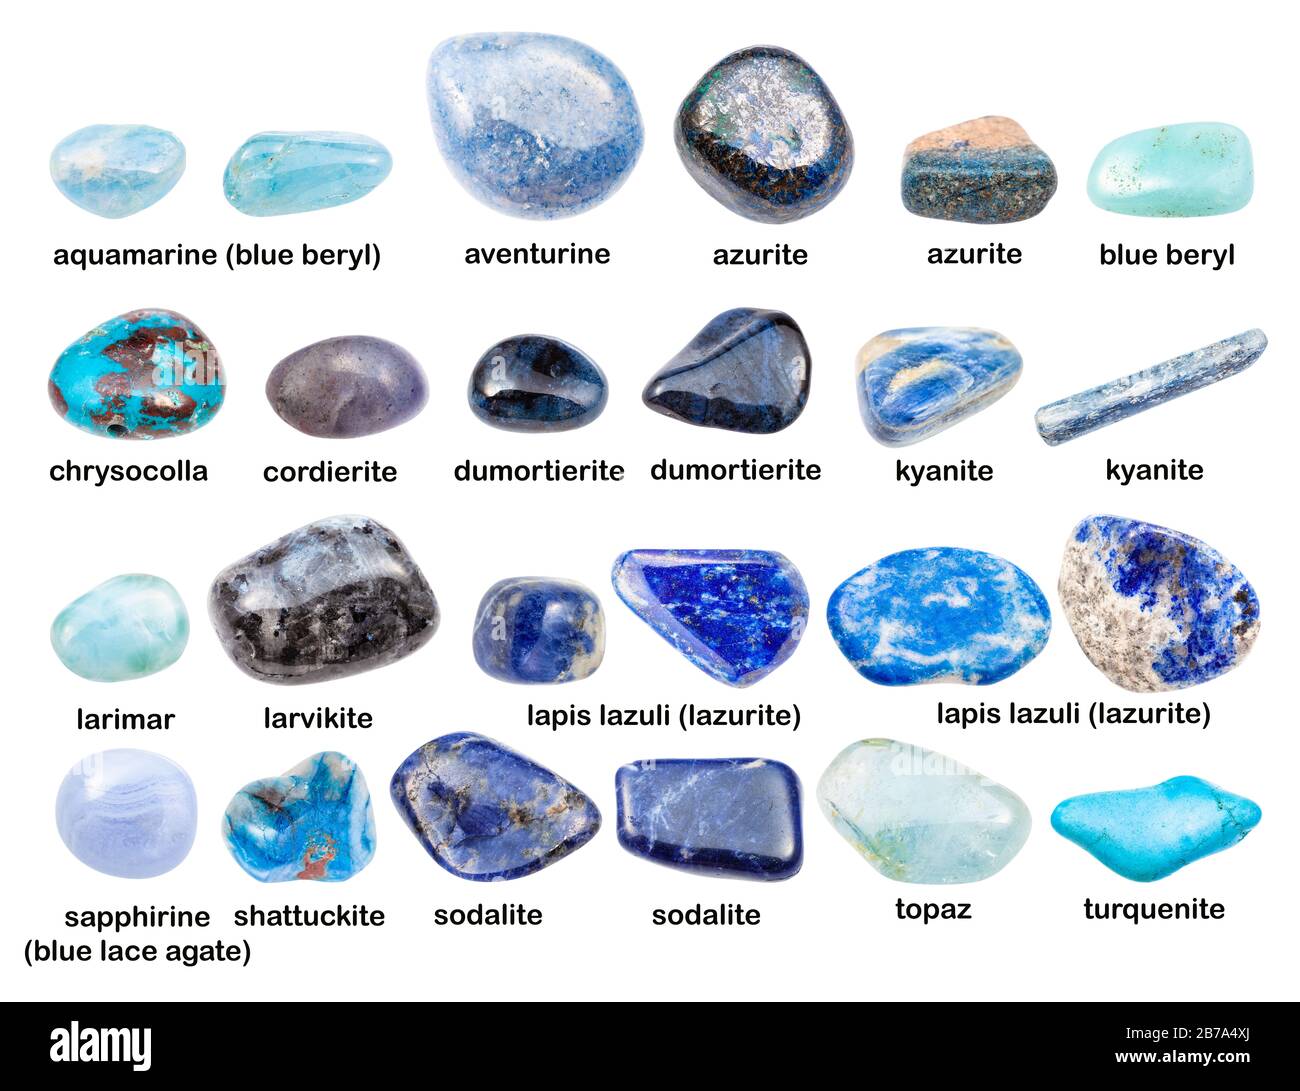 Collage verschiedener blauer Edelsteine mit Namen (Schattuckit, Kyanit,  Topaz, Lazurit, Turquenit, Aquamarin, Dumortierit, Sodalit, Larvikiit,  Larima Stockfotografie - Alamy